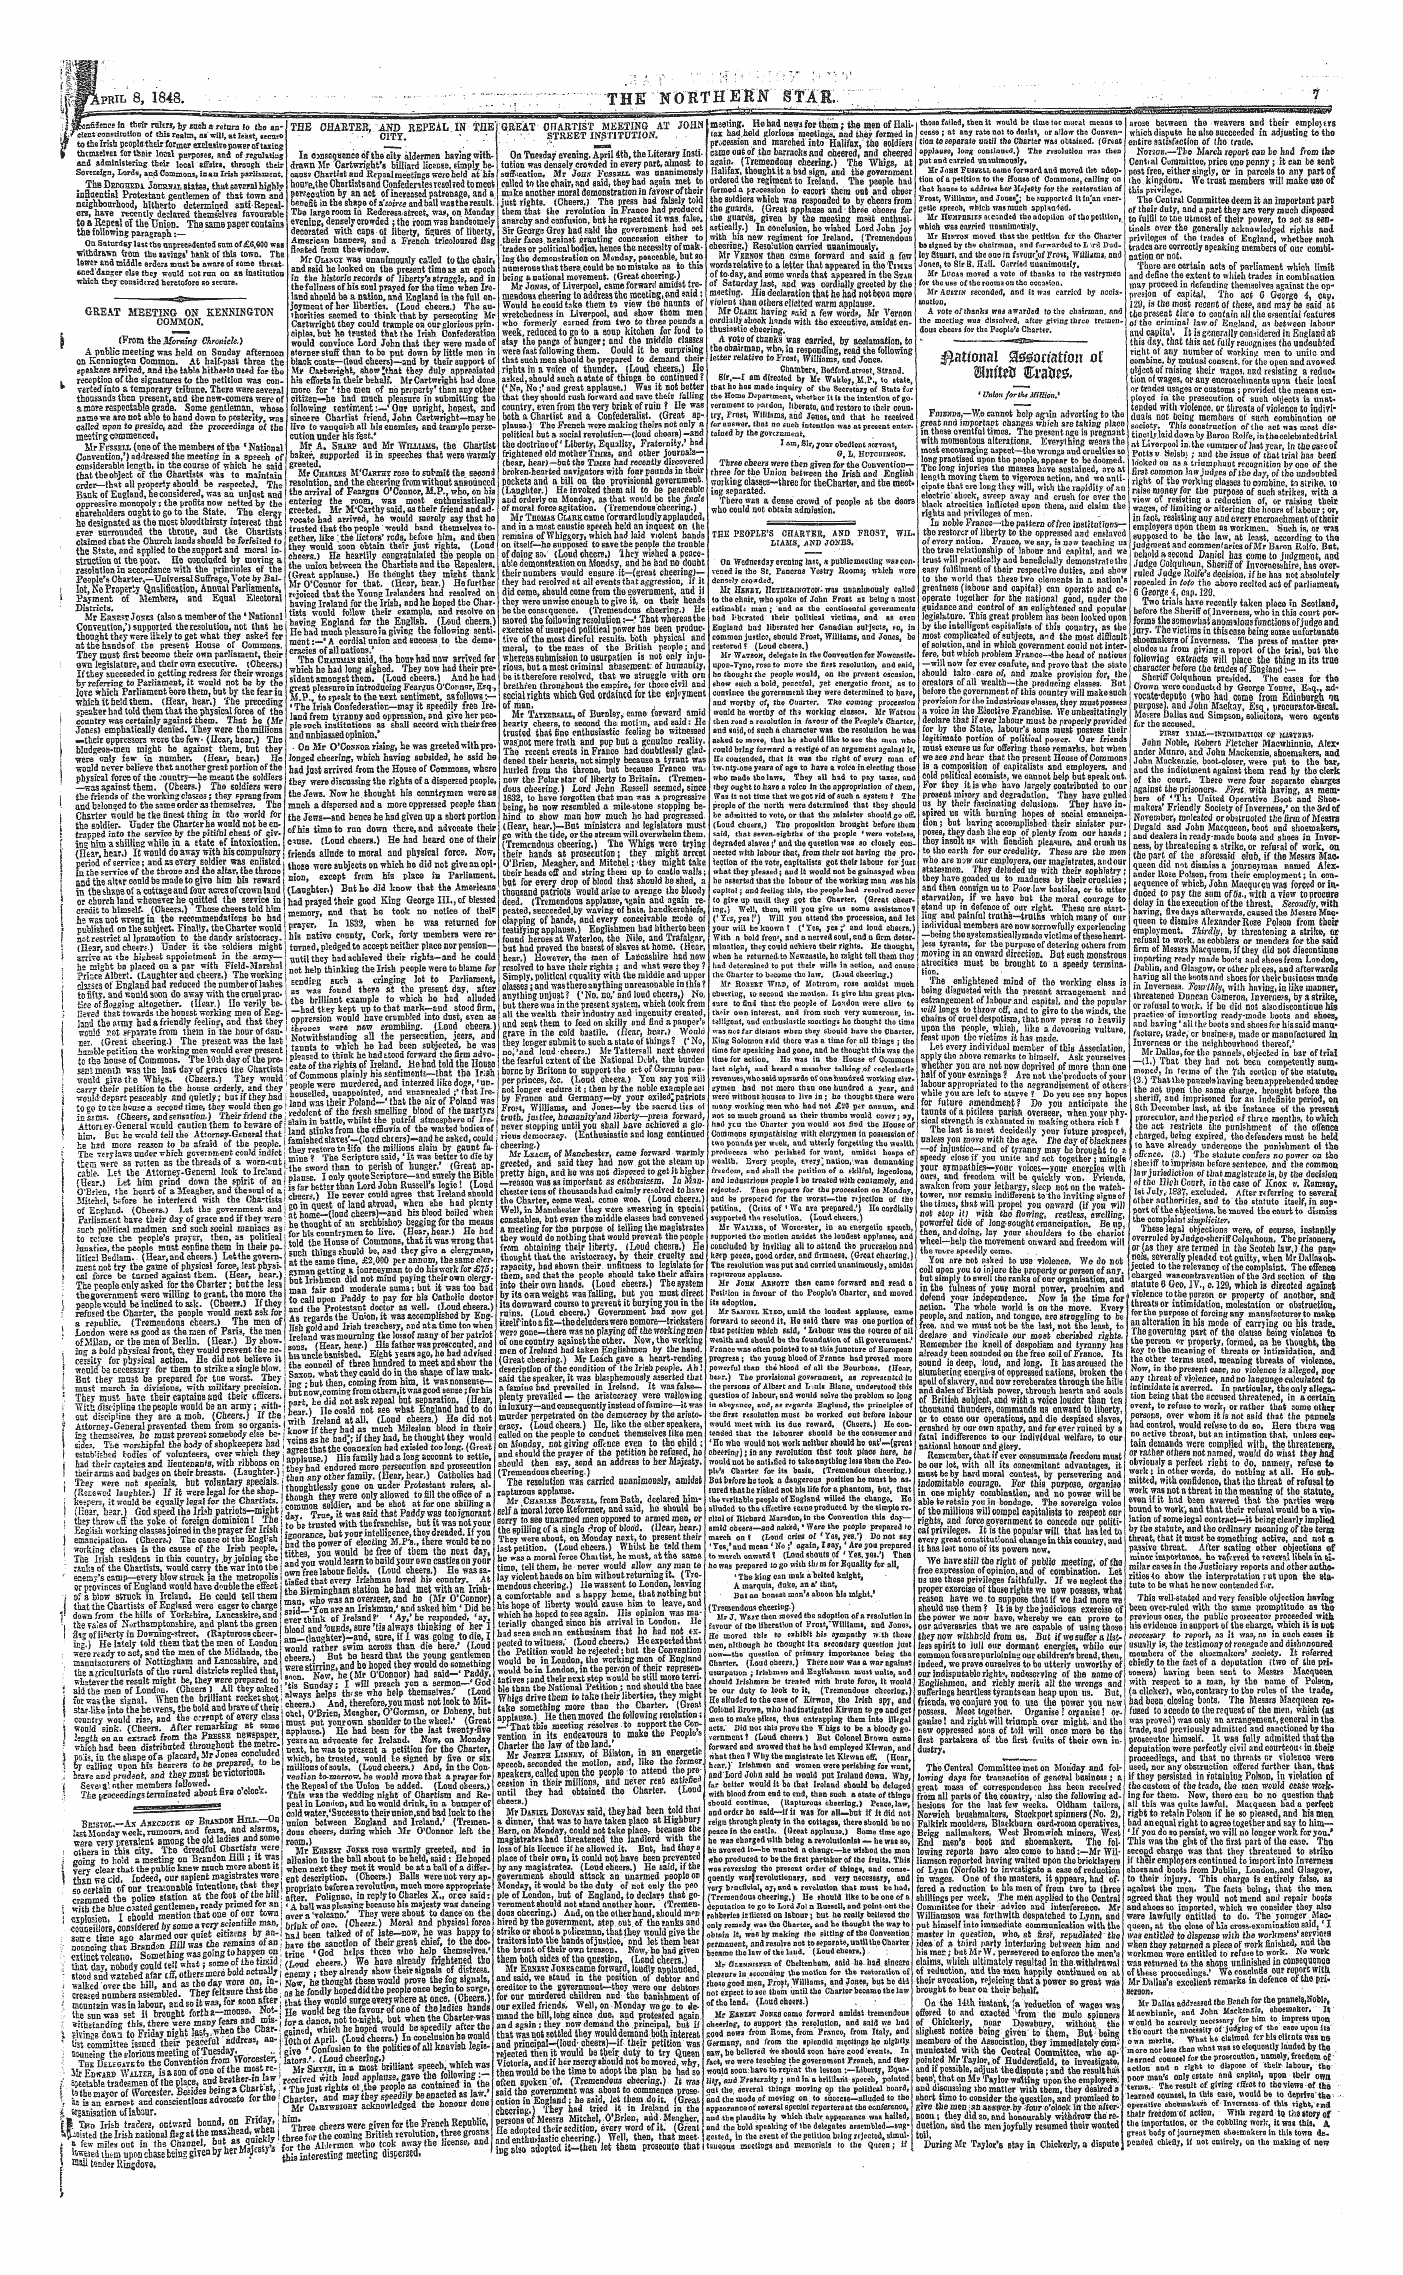 Northern Star (1837-1852): jS F Y, 1st edition - ^Attmtai Msottotion Ot Wlmttxi Fete,